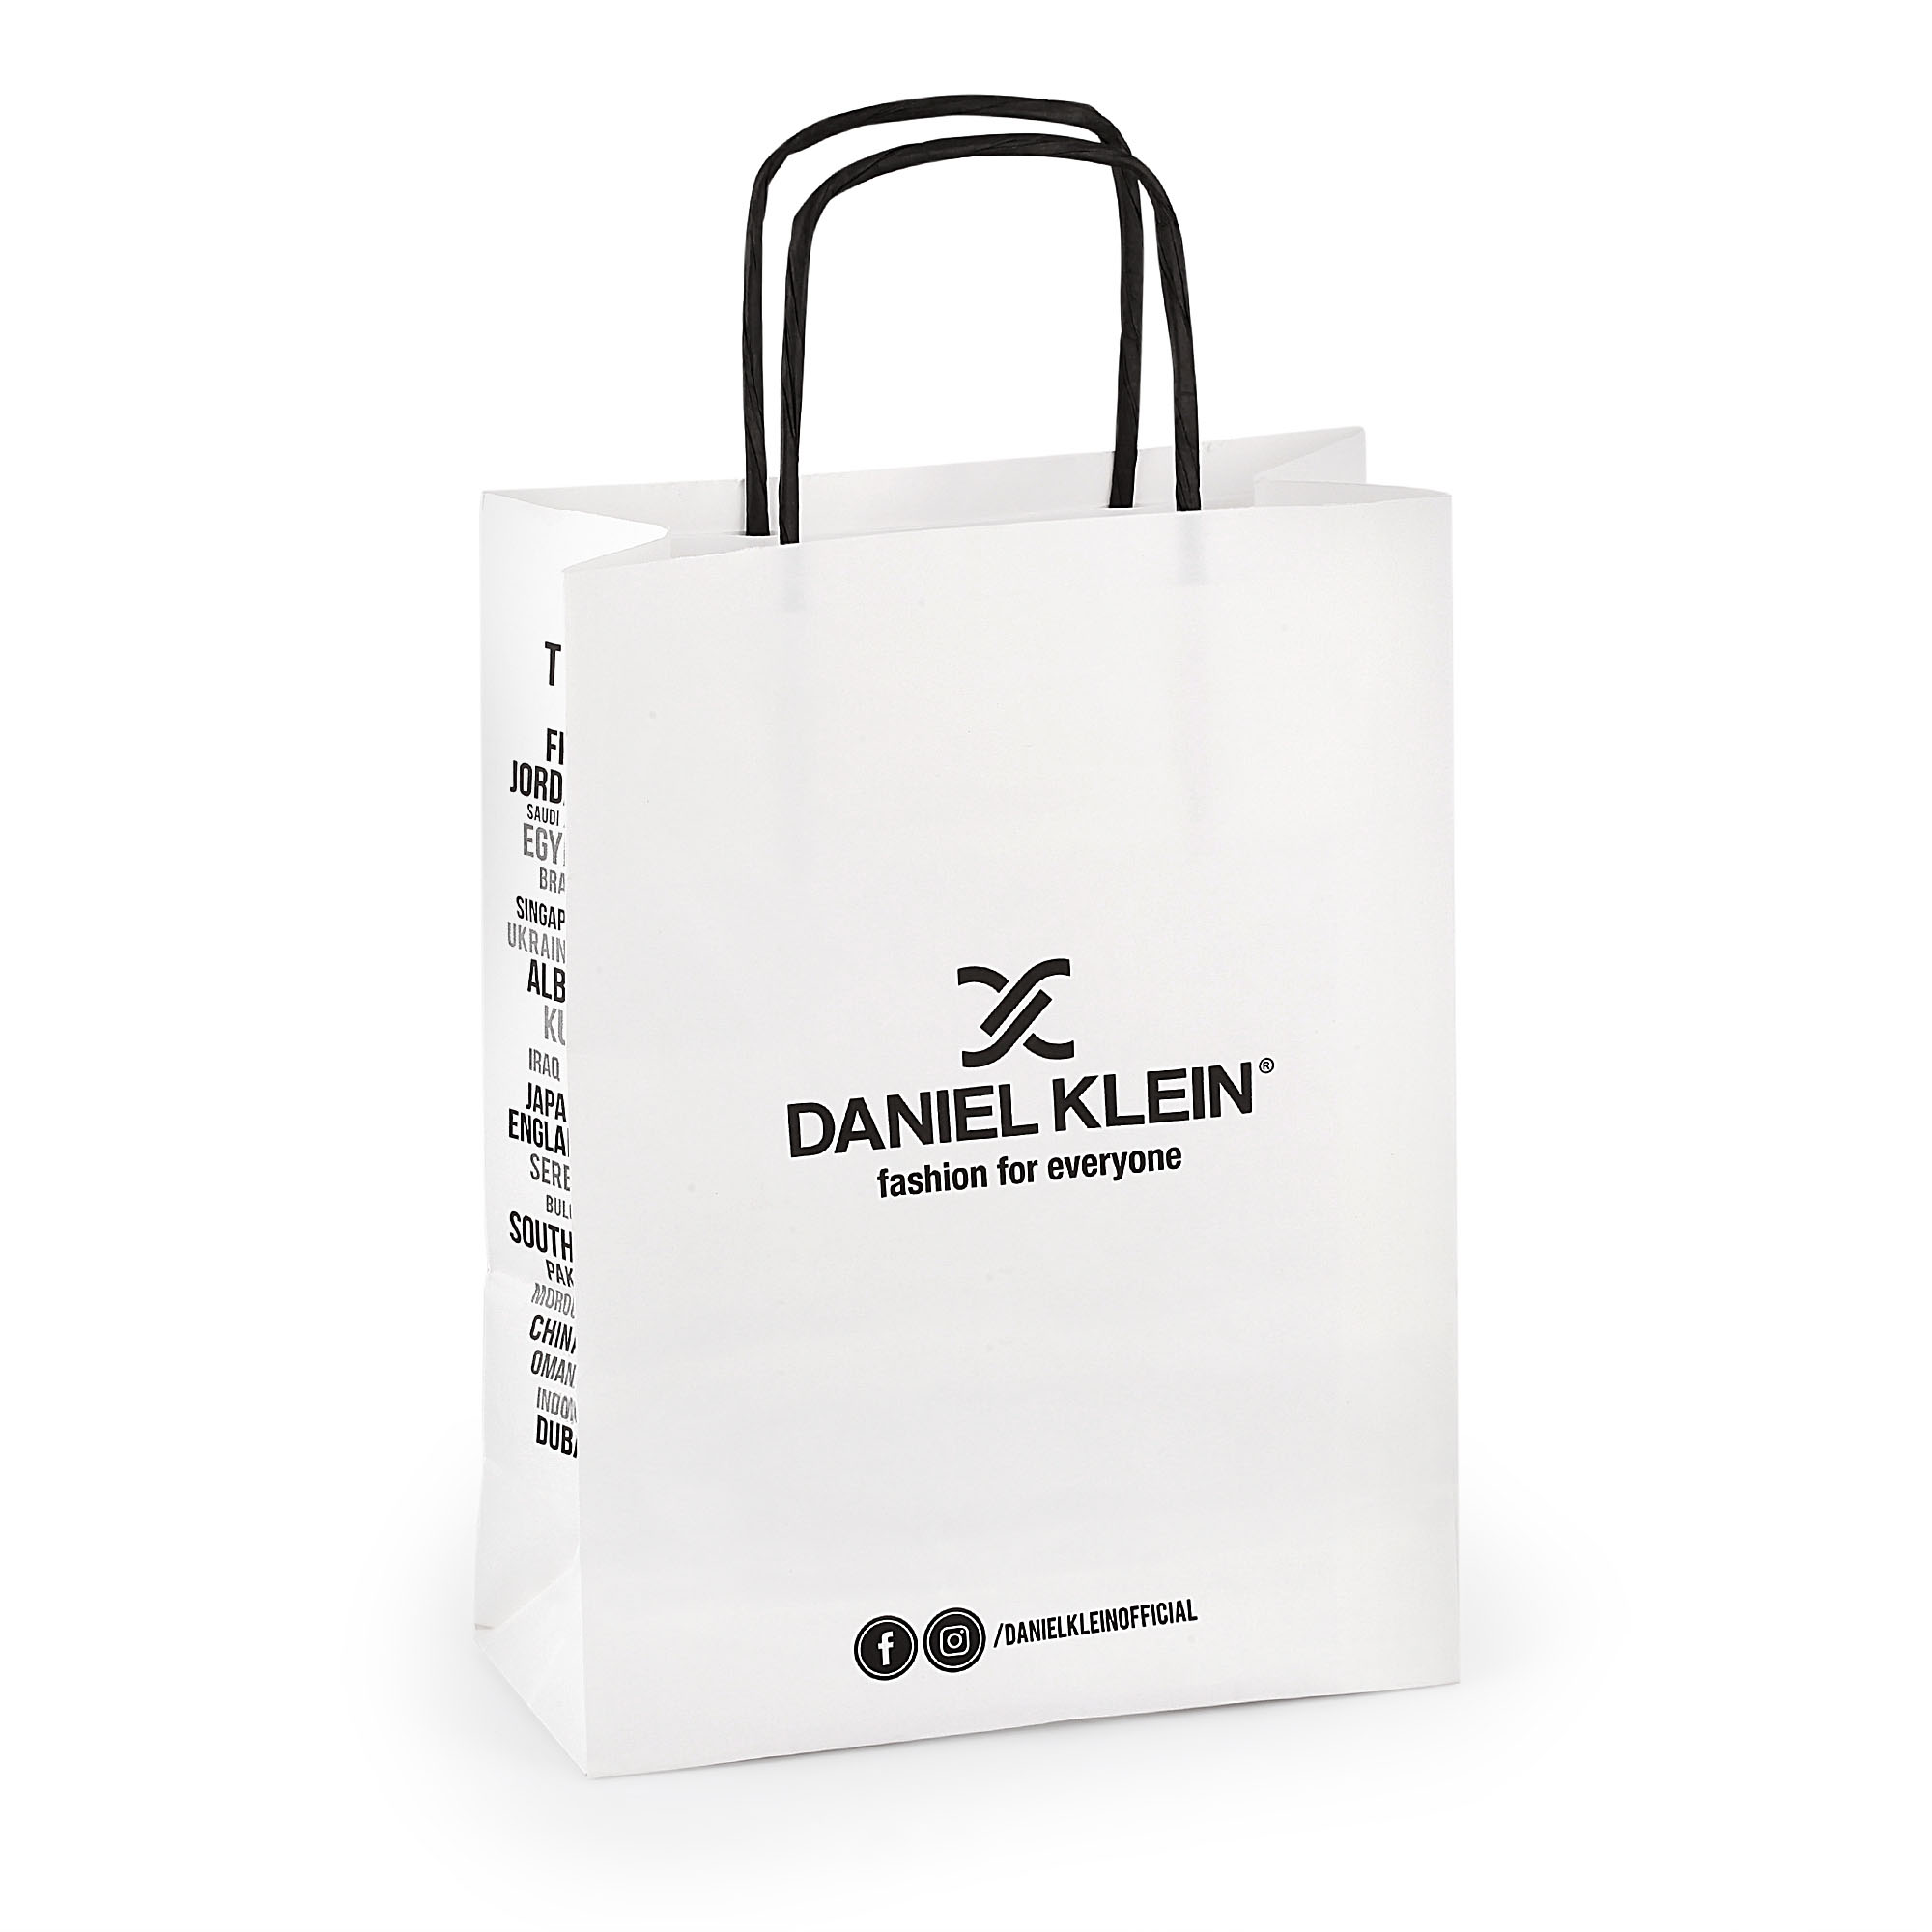 Ceas pentru dama, Daniel Klein Premium, DK.1.12562.1